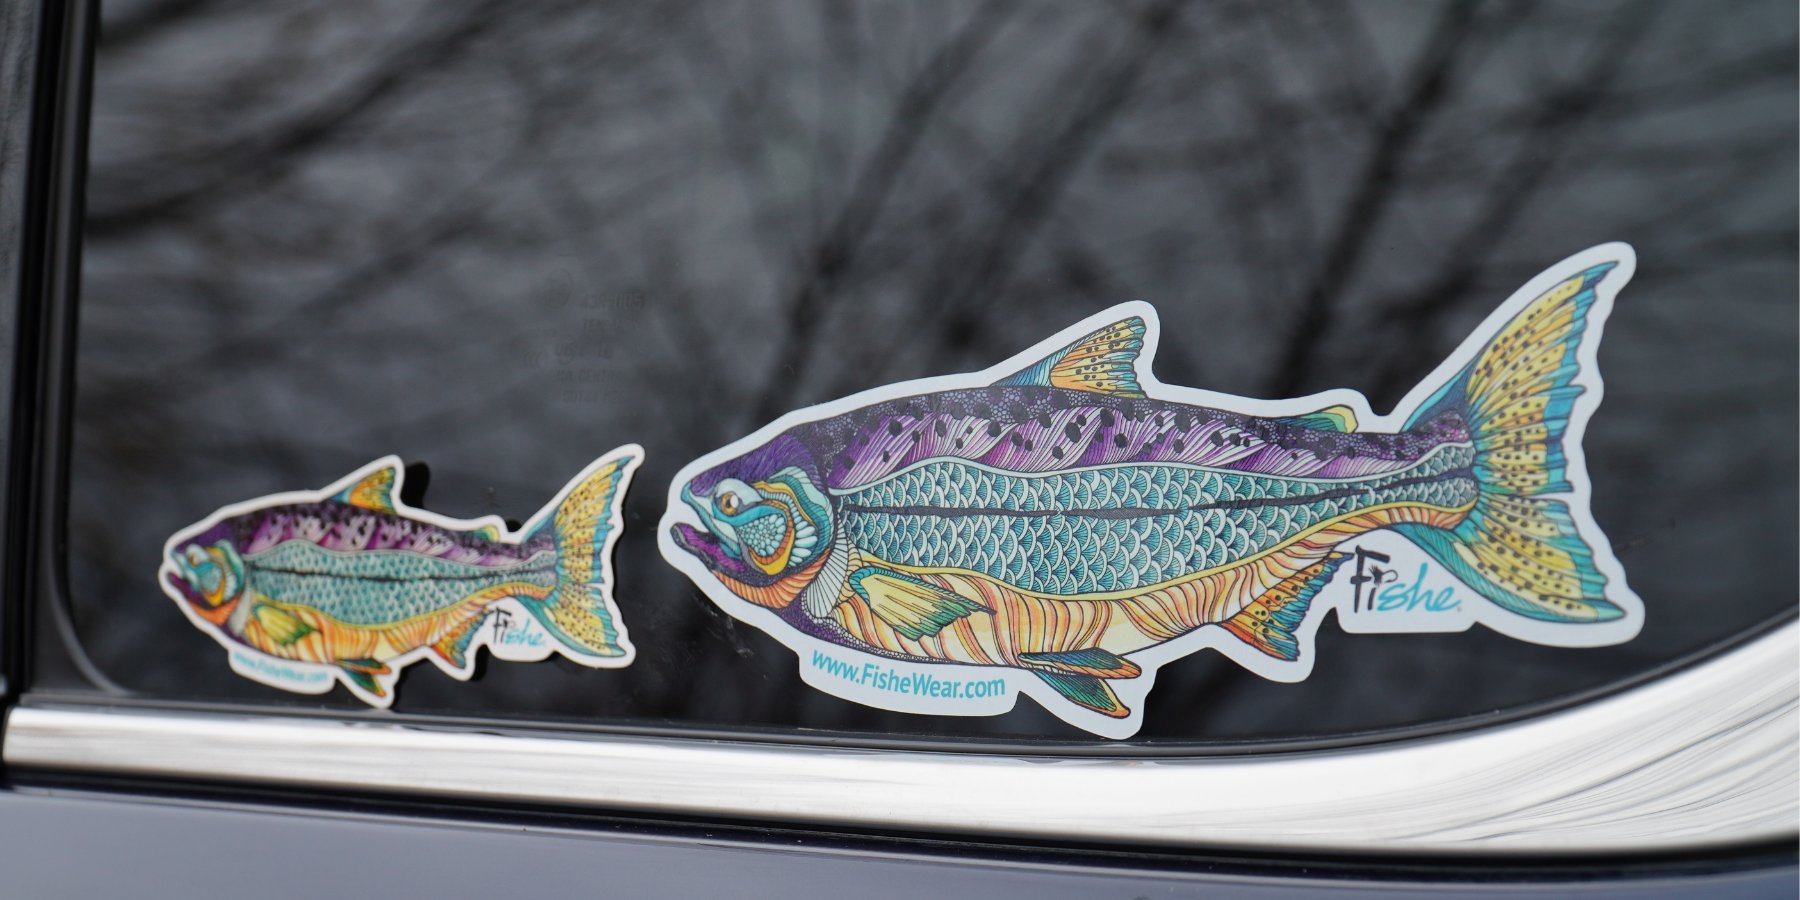 Stickers - FisheWear